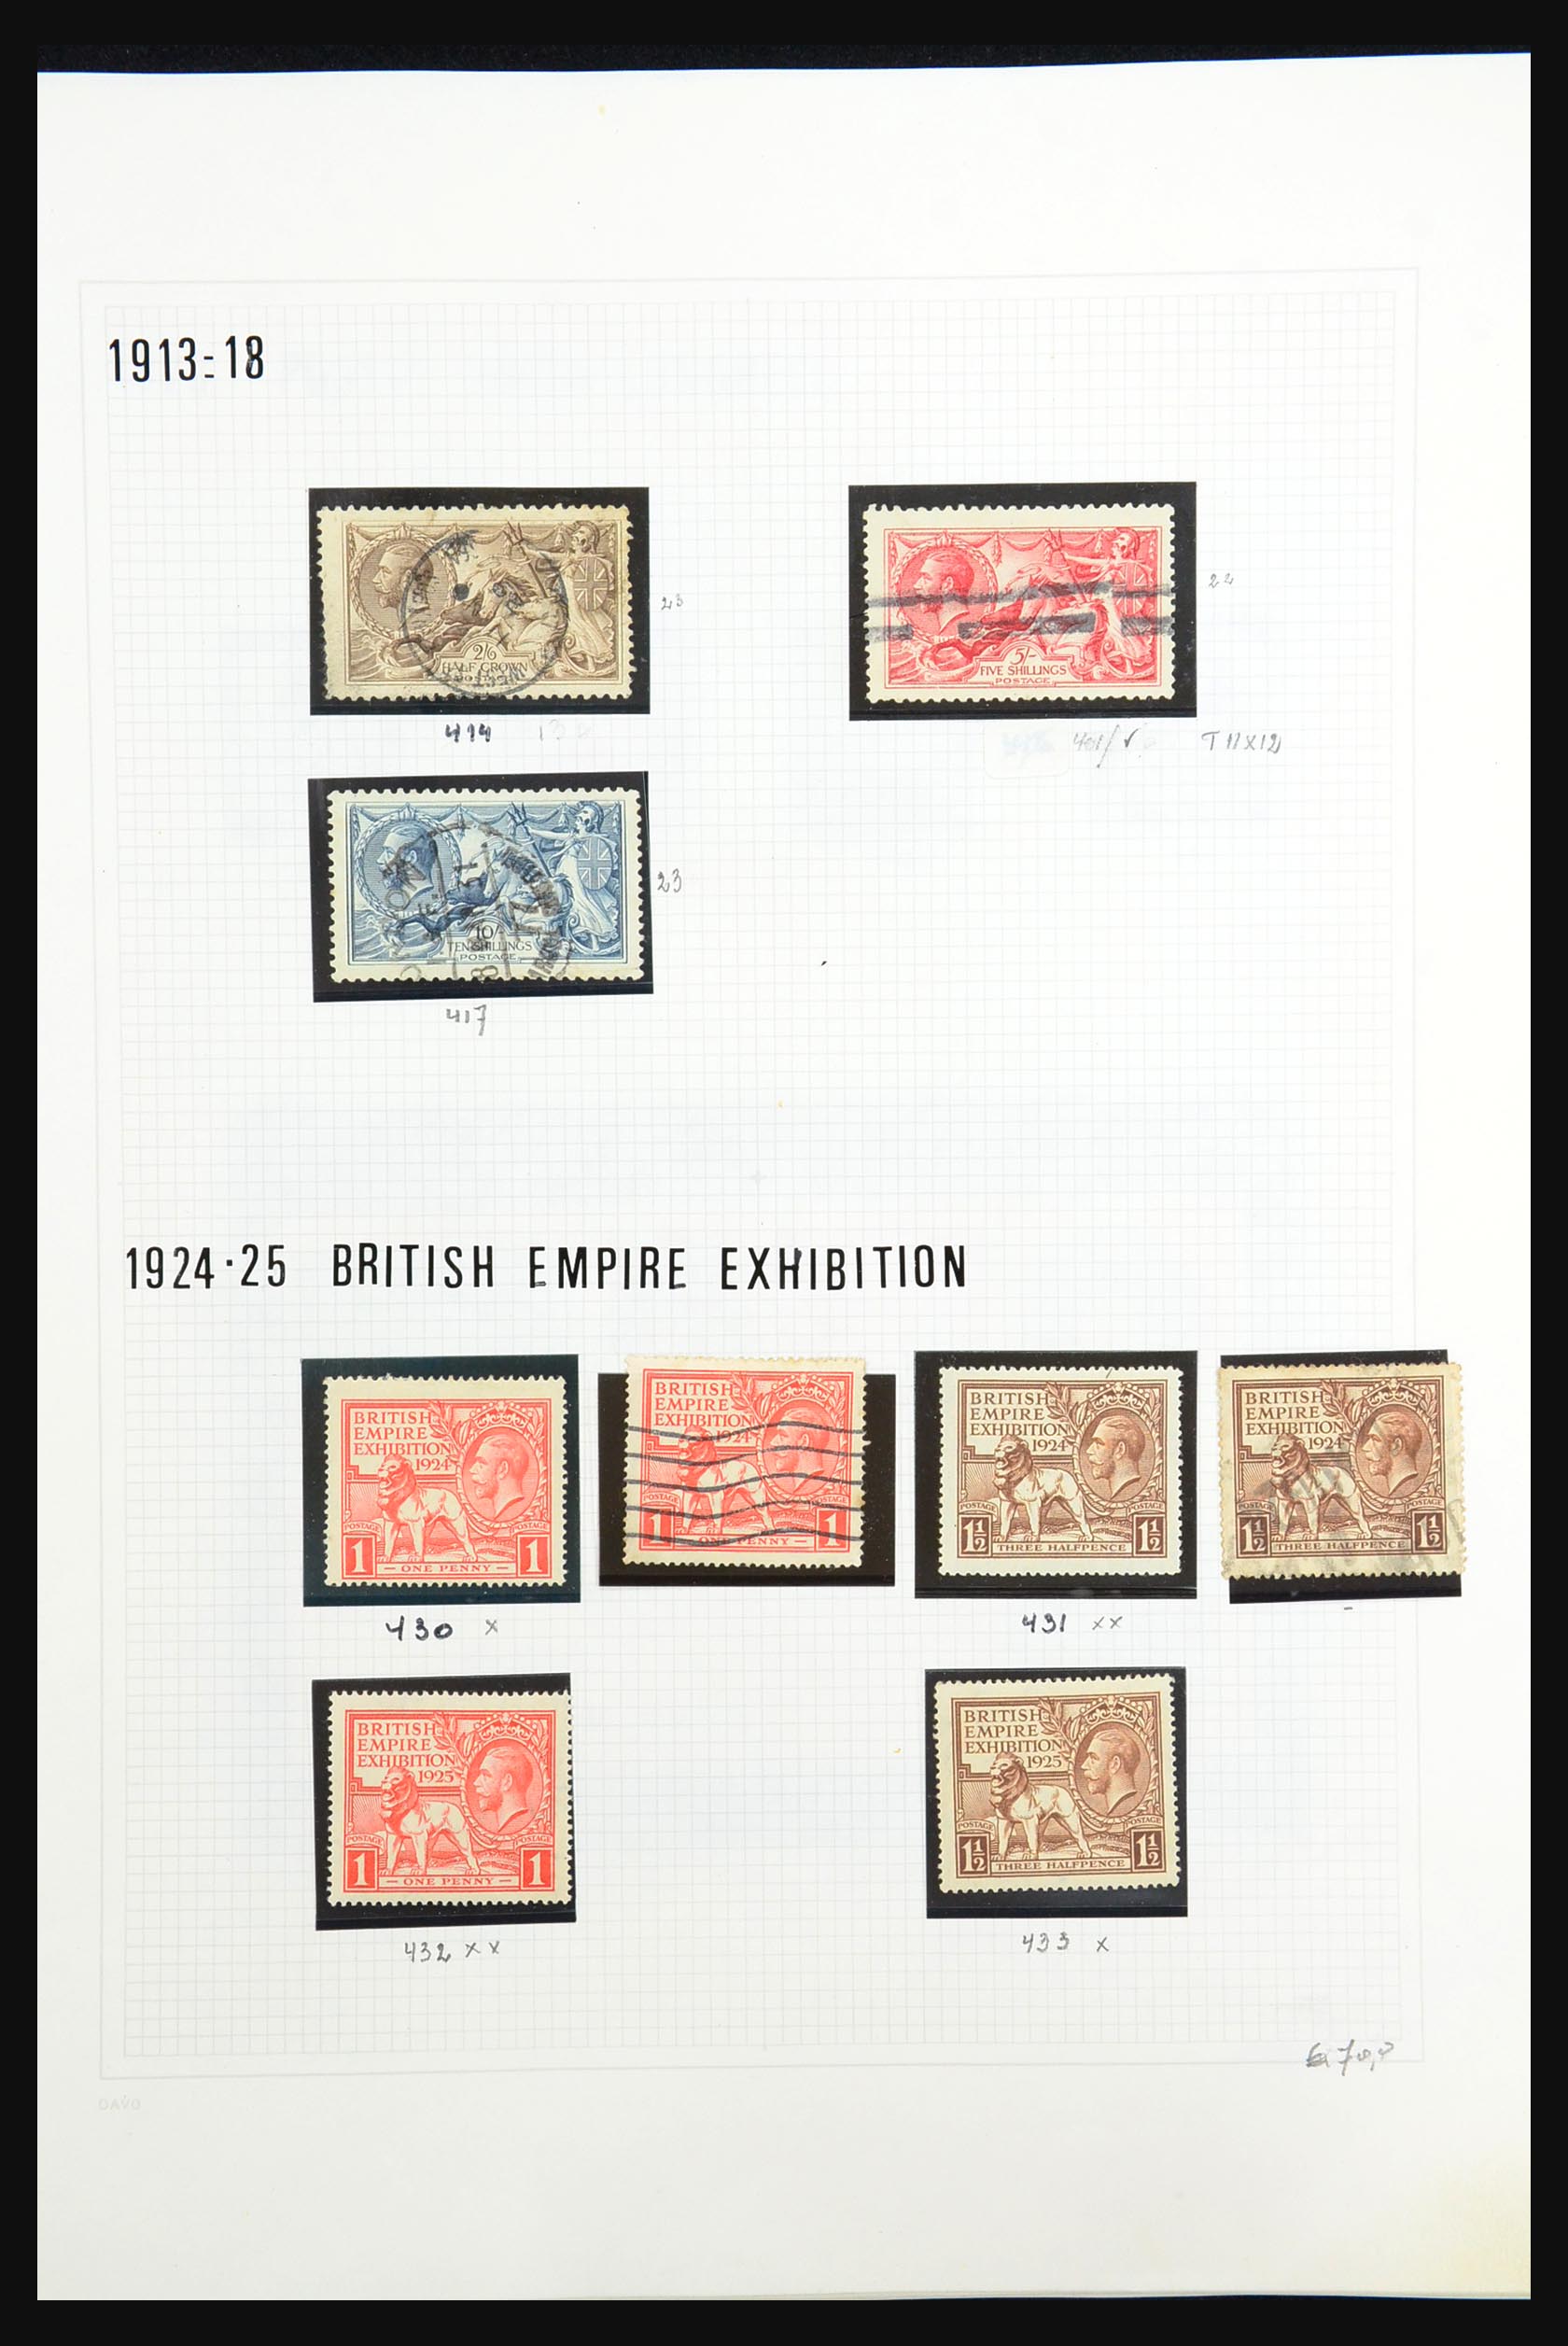 31348 025 - 31348 Engeland 1840-1945.